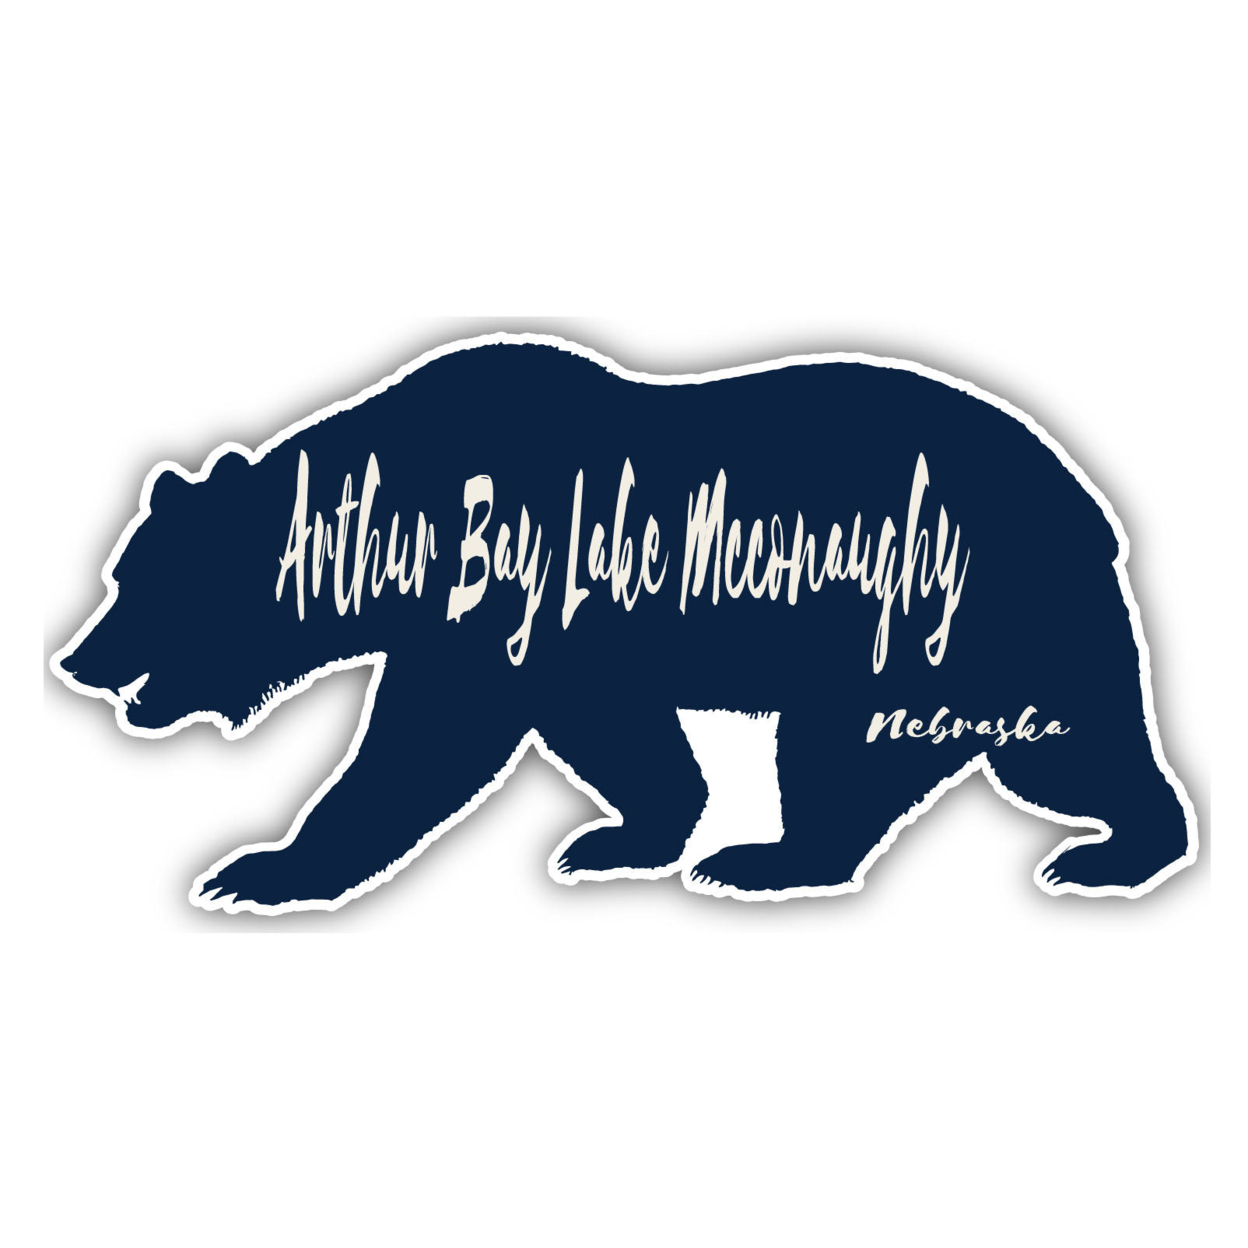 Arthur Bay Lake Mcconaughy Nebraska Souvenir Decorative Stickers (Choose Theme And Size) - 4-Pack, 4-Inch, Bear